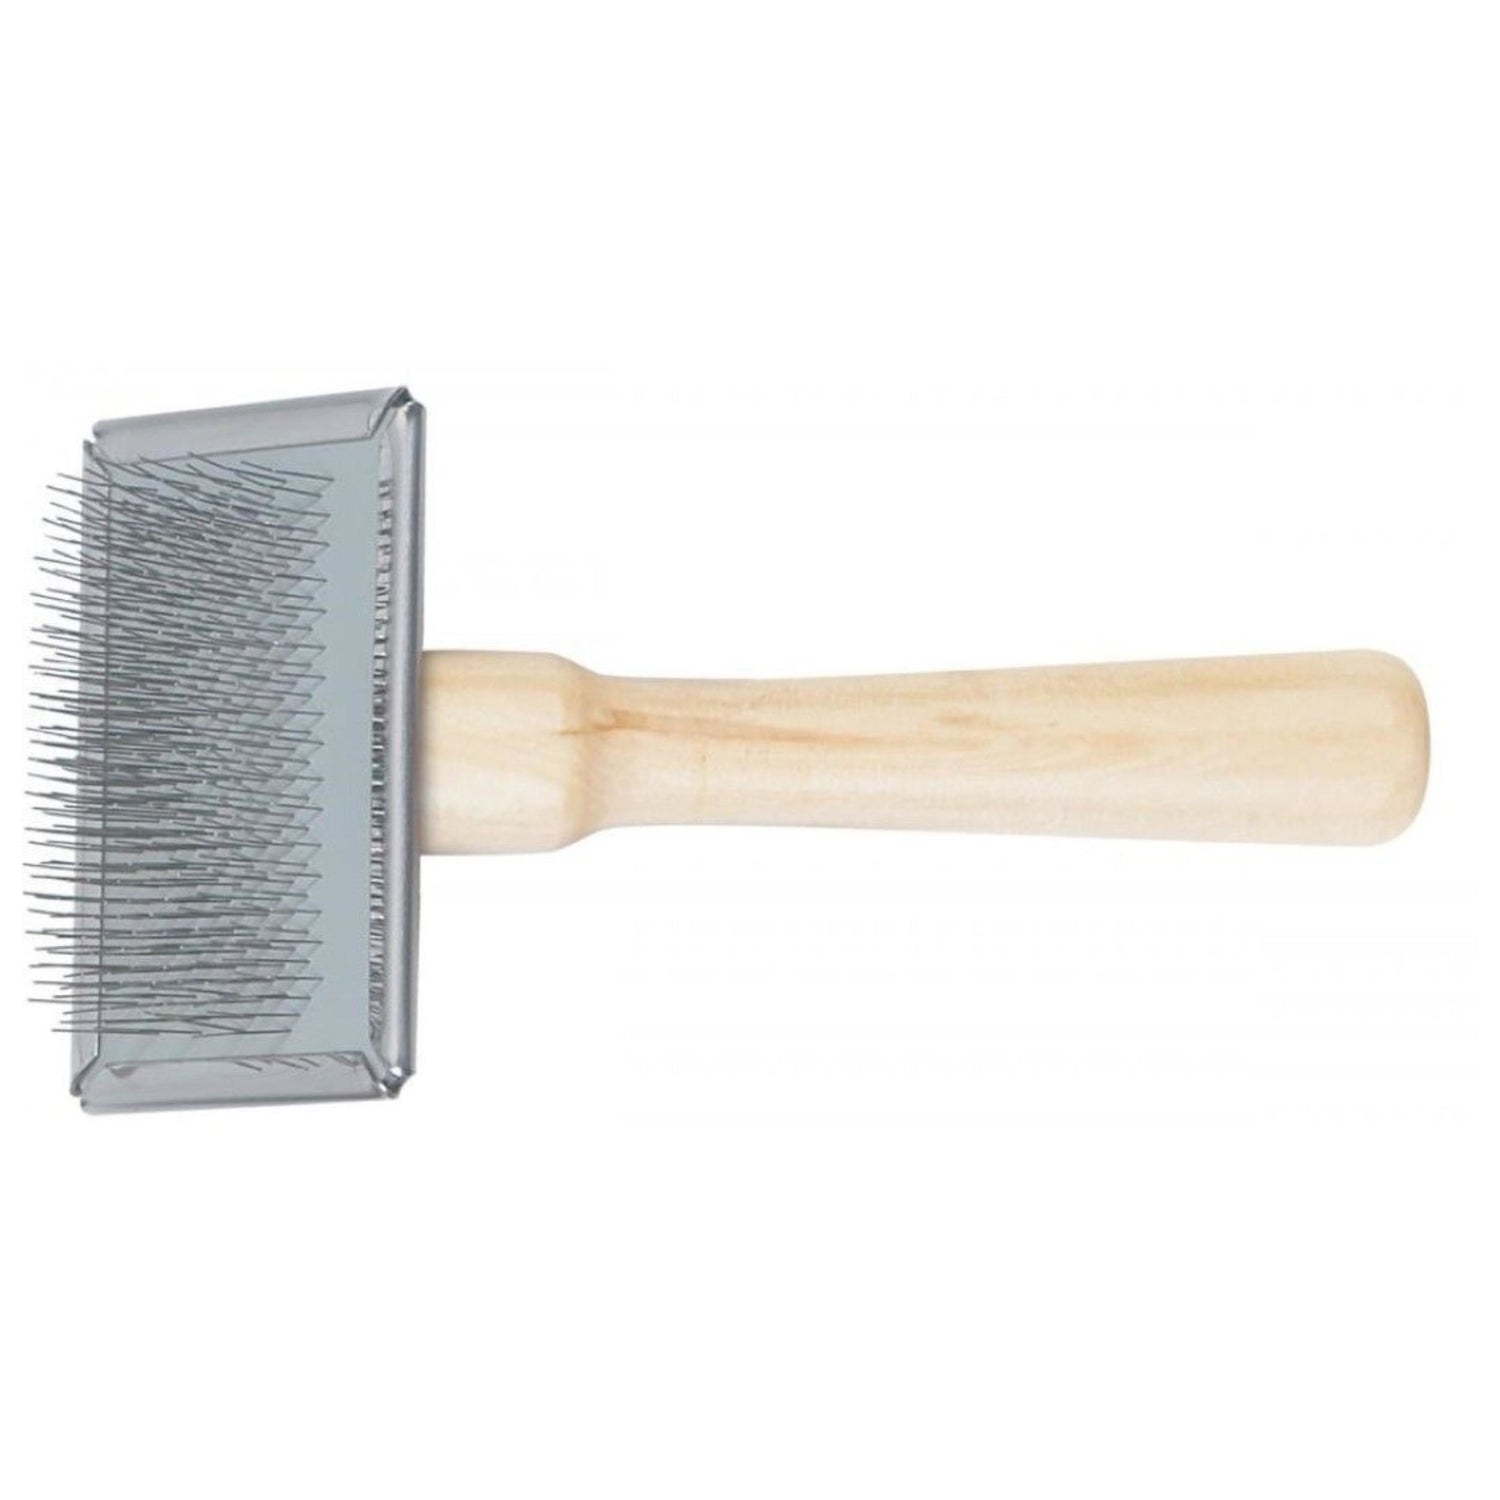 Slicker Pet Grooming Brush With Wooden Handle